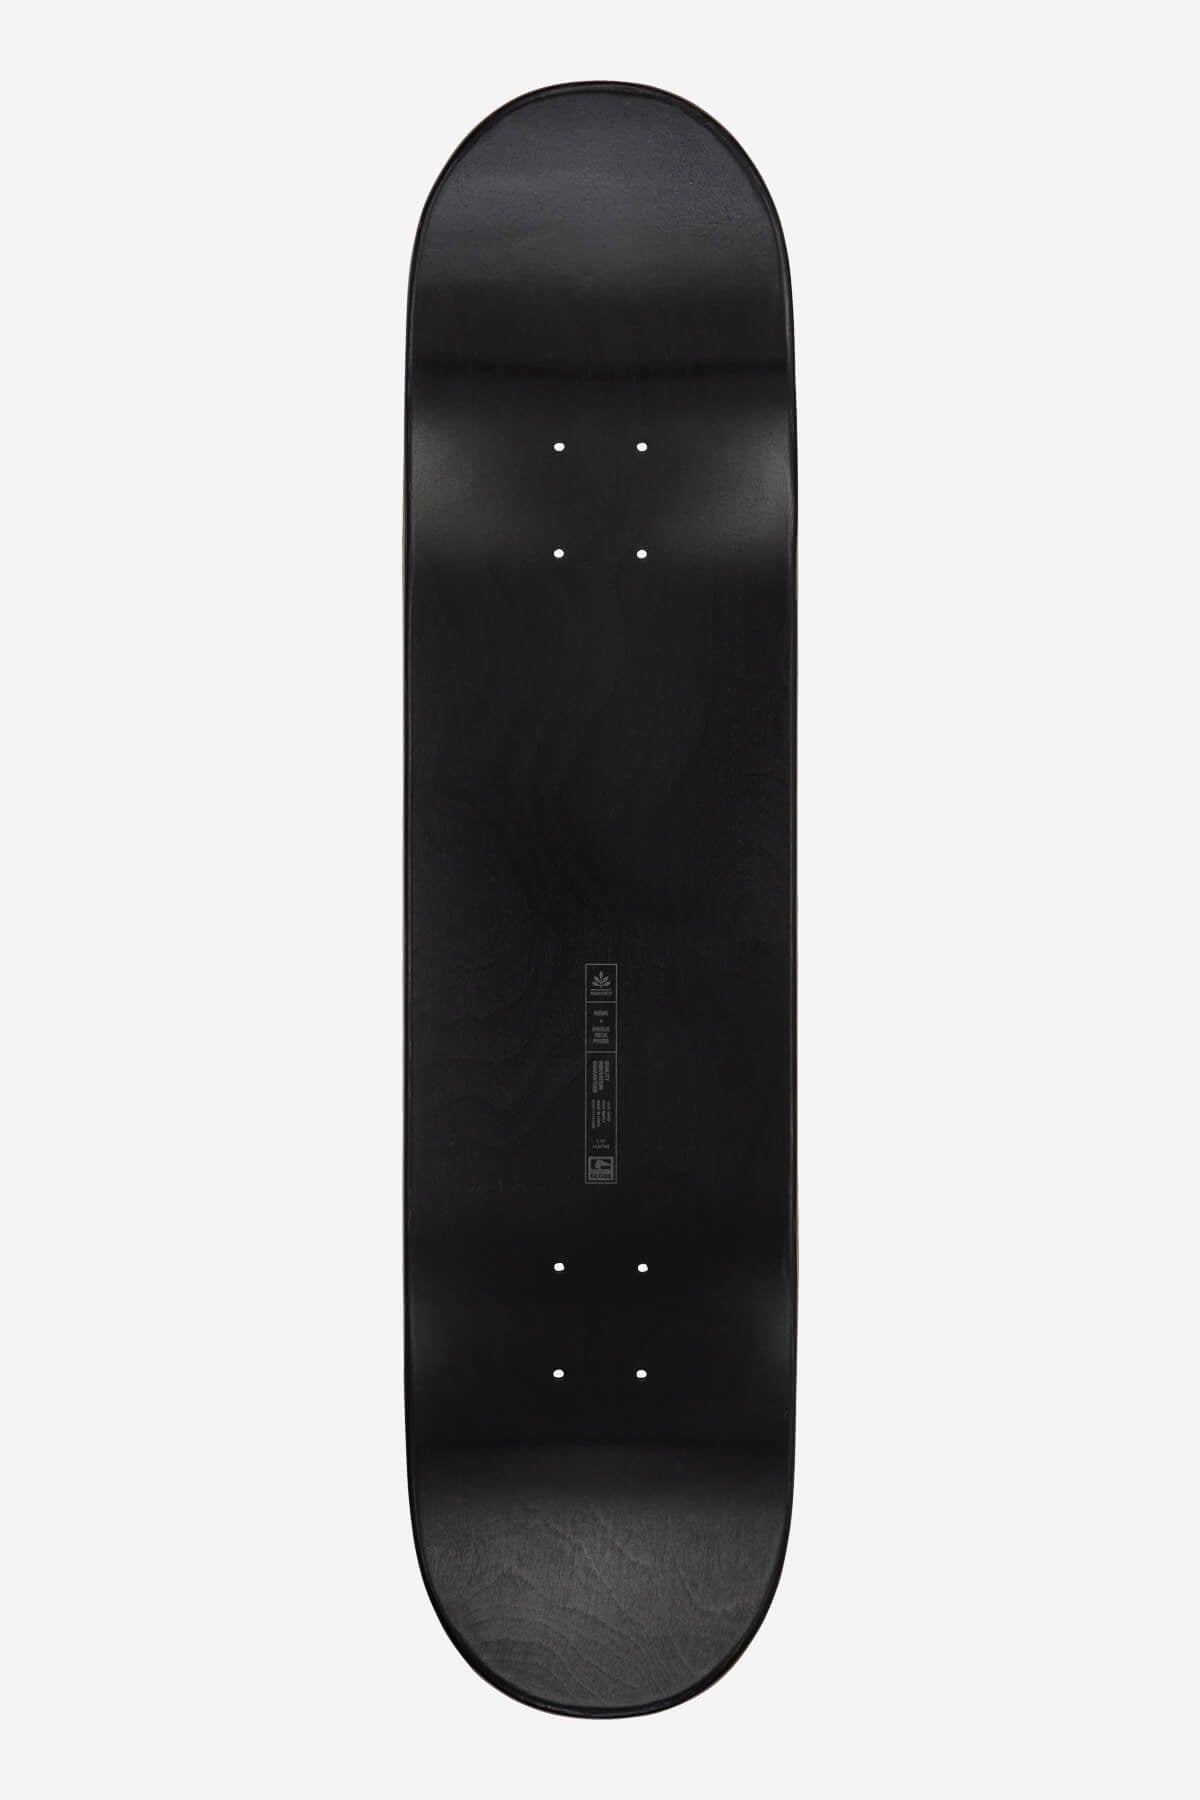 Globe - G1 Lineform 2 - Pizarra - 7,75 Skateboard Deck